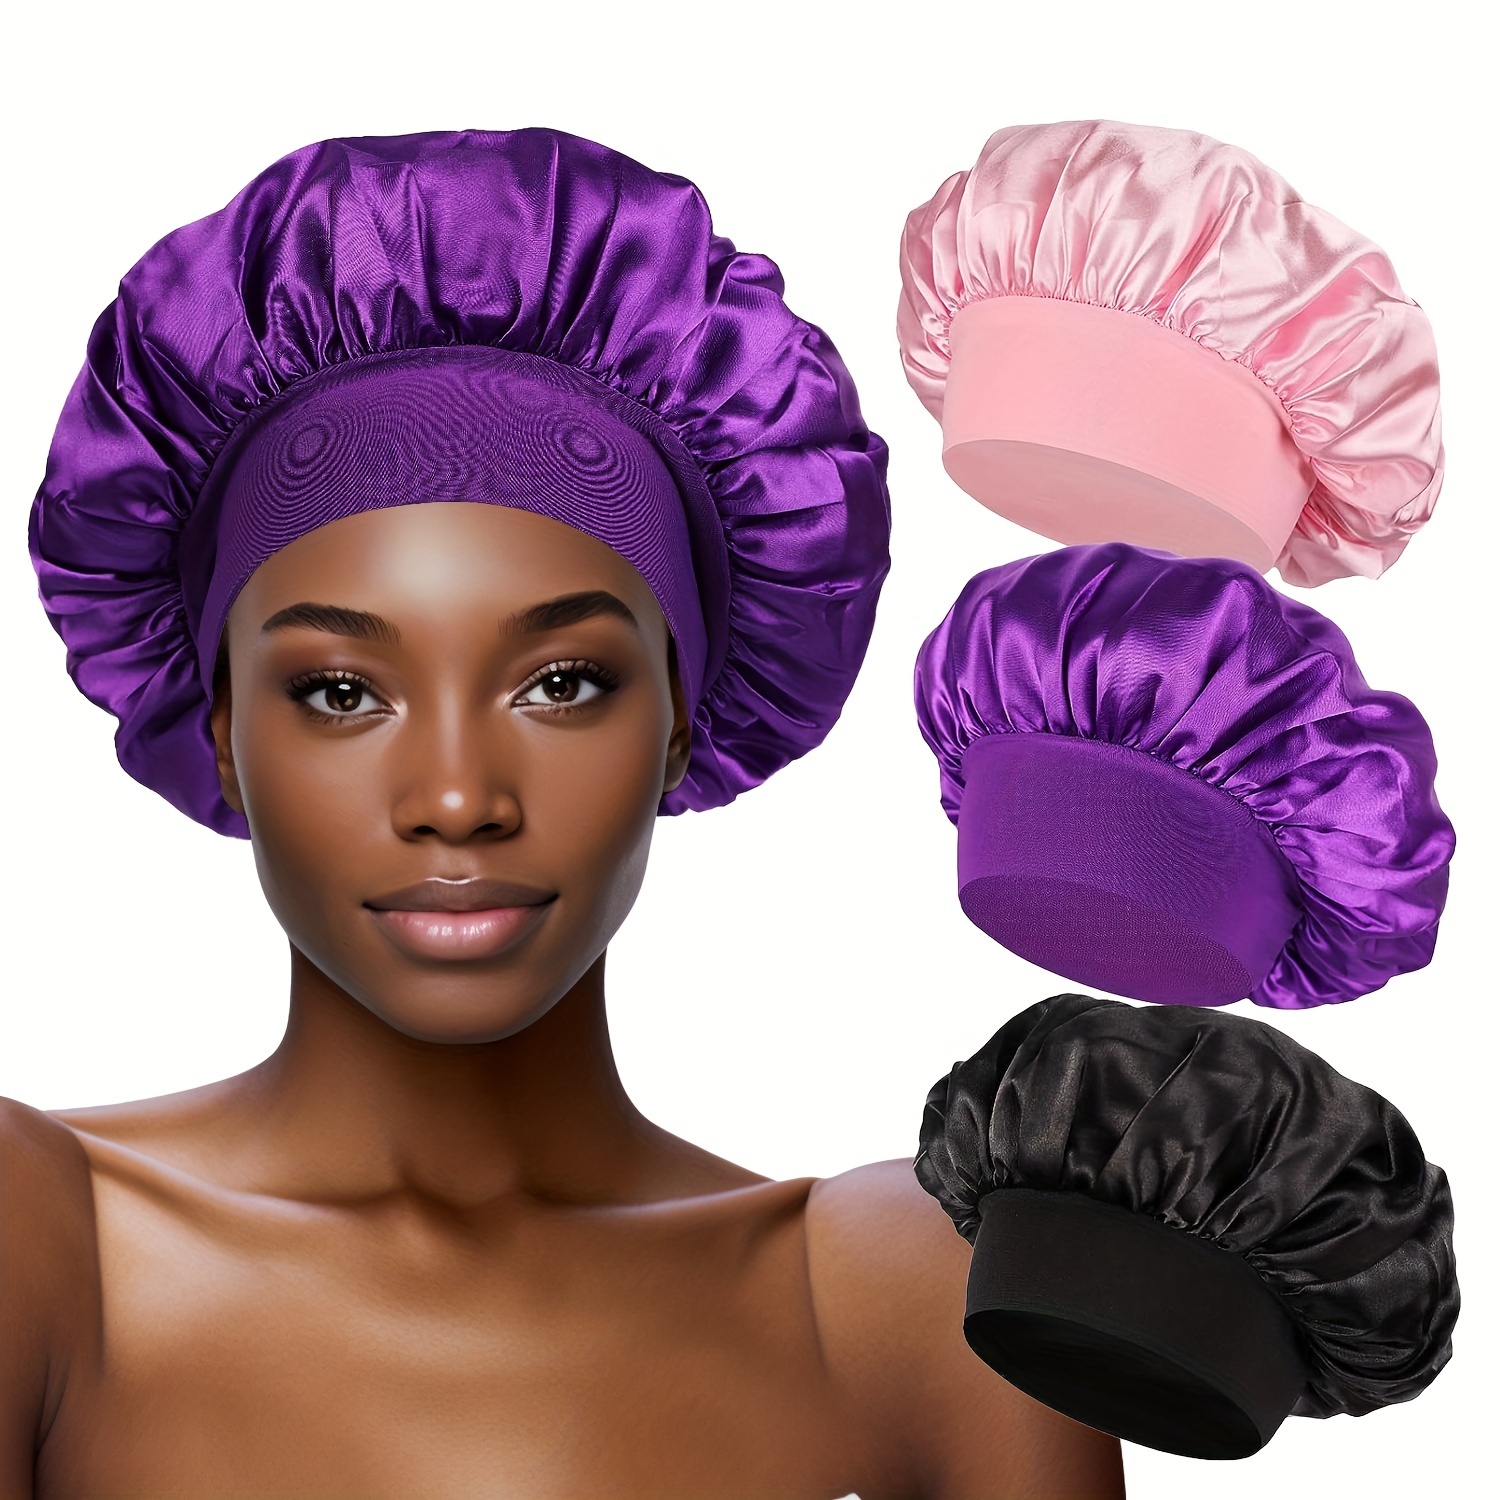 

3pcs Satin Bonnet Silk Bonnet Hair Bonnet For Sleeping, Reusable Adjusting Hair Care Wrap Cap Sleep Caps For Women